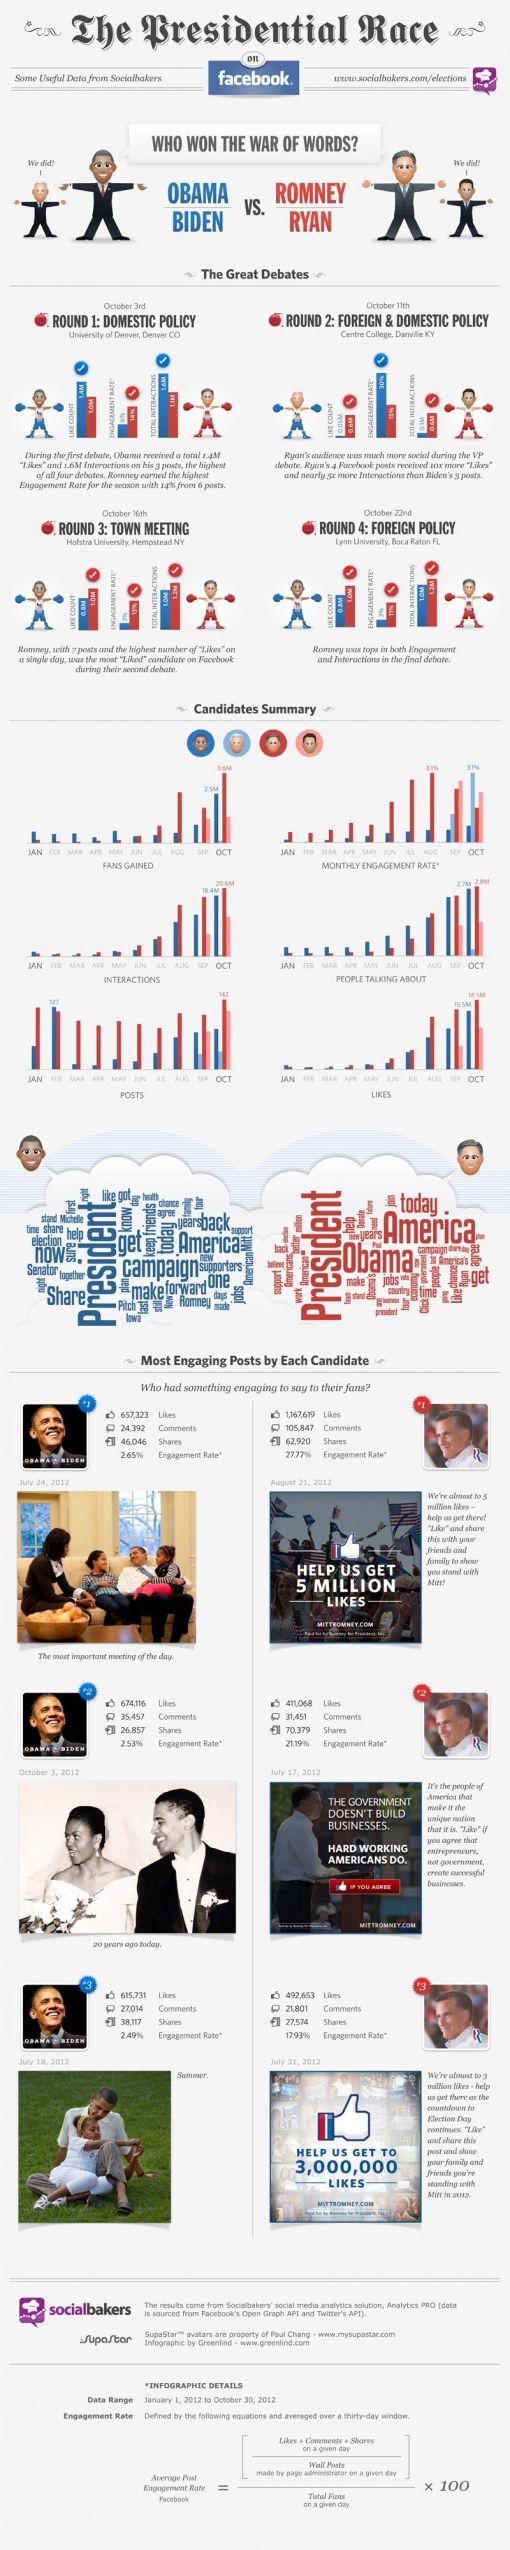 infographic-obama-v-romney-final1.jpg